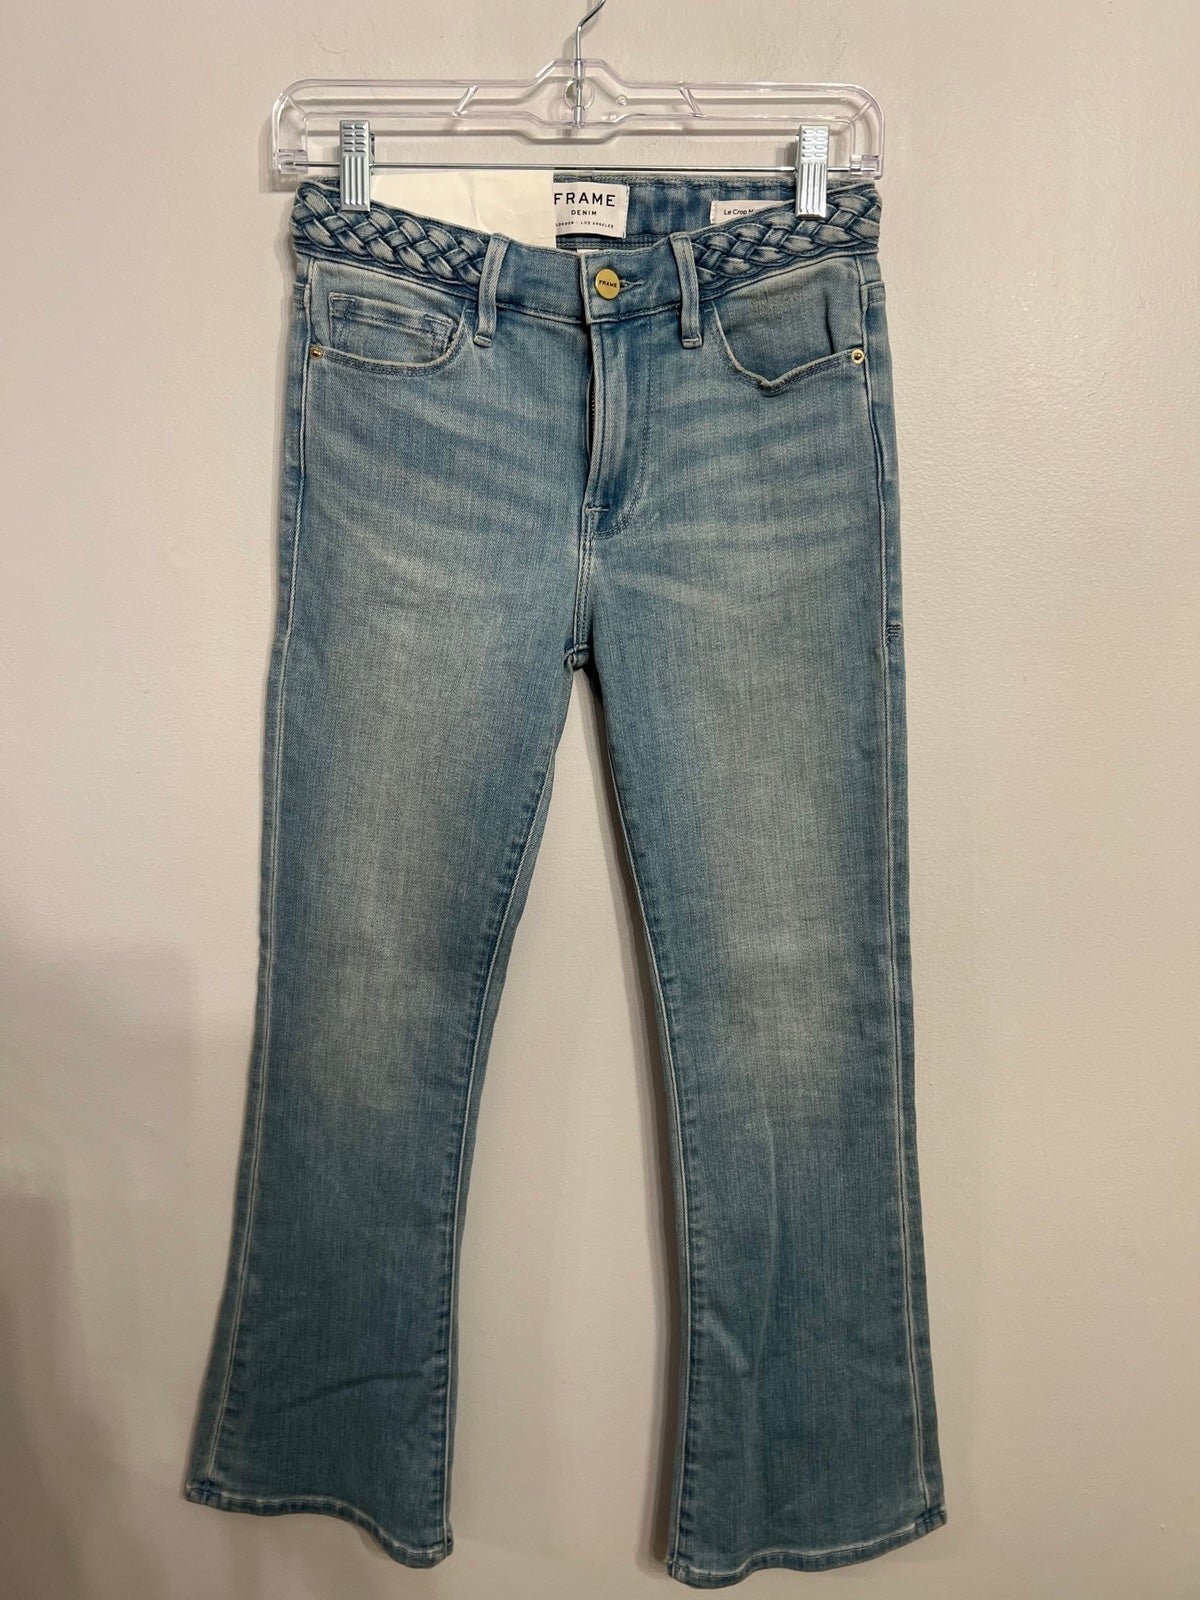 Gorgeous Frame Denim Womens Le Crop Mini Boot Jeans 24 Fountain Blue Braided Waist NWT GSZ3nA9aL on sale